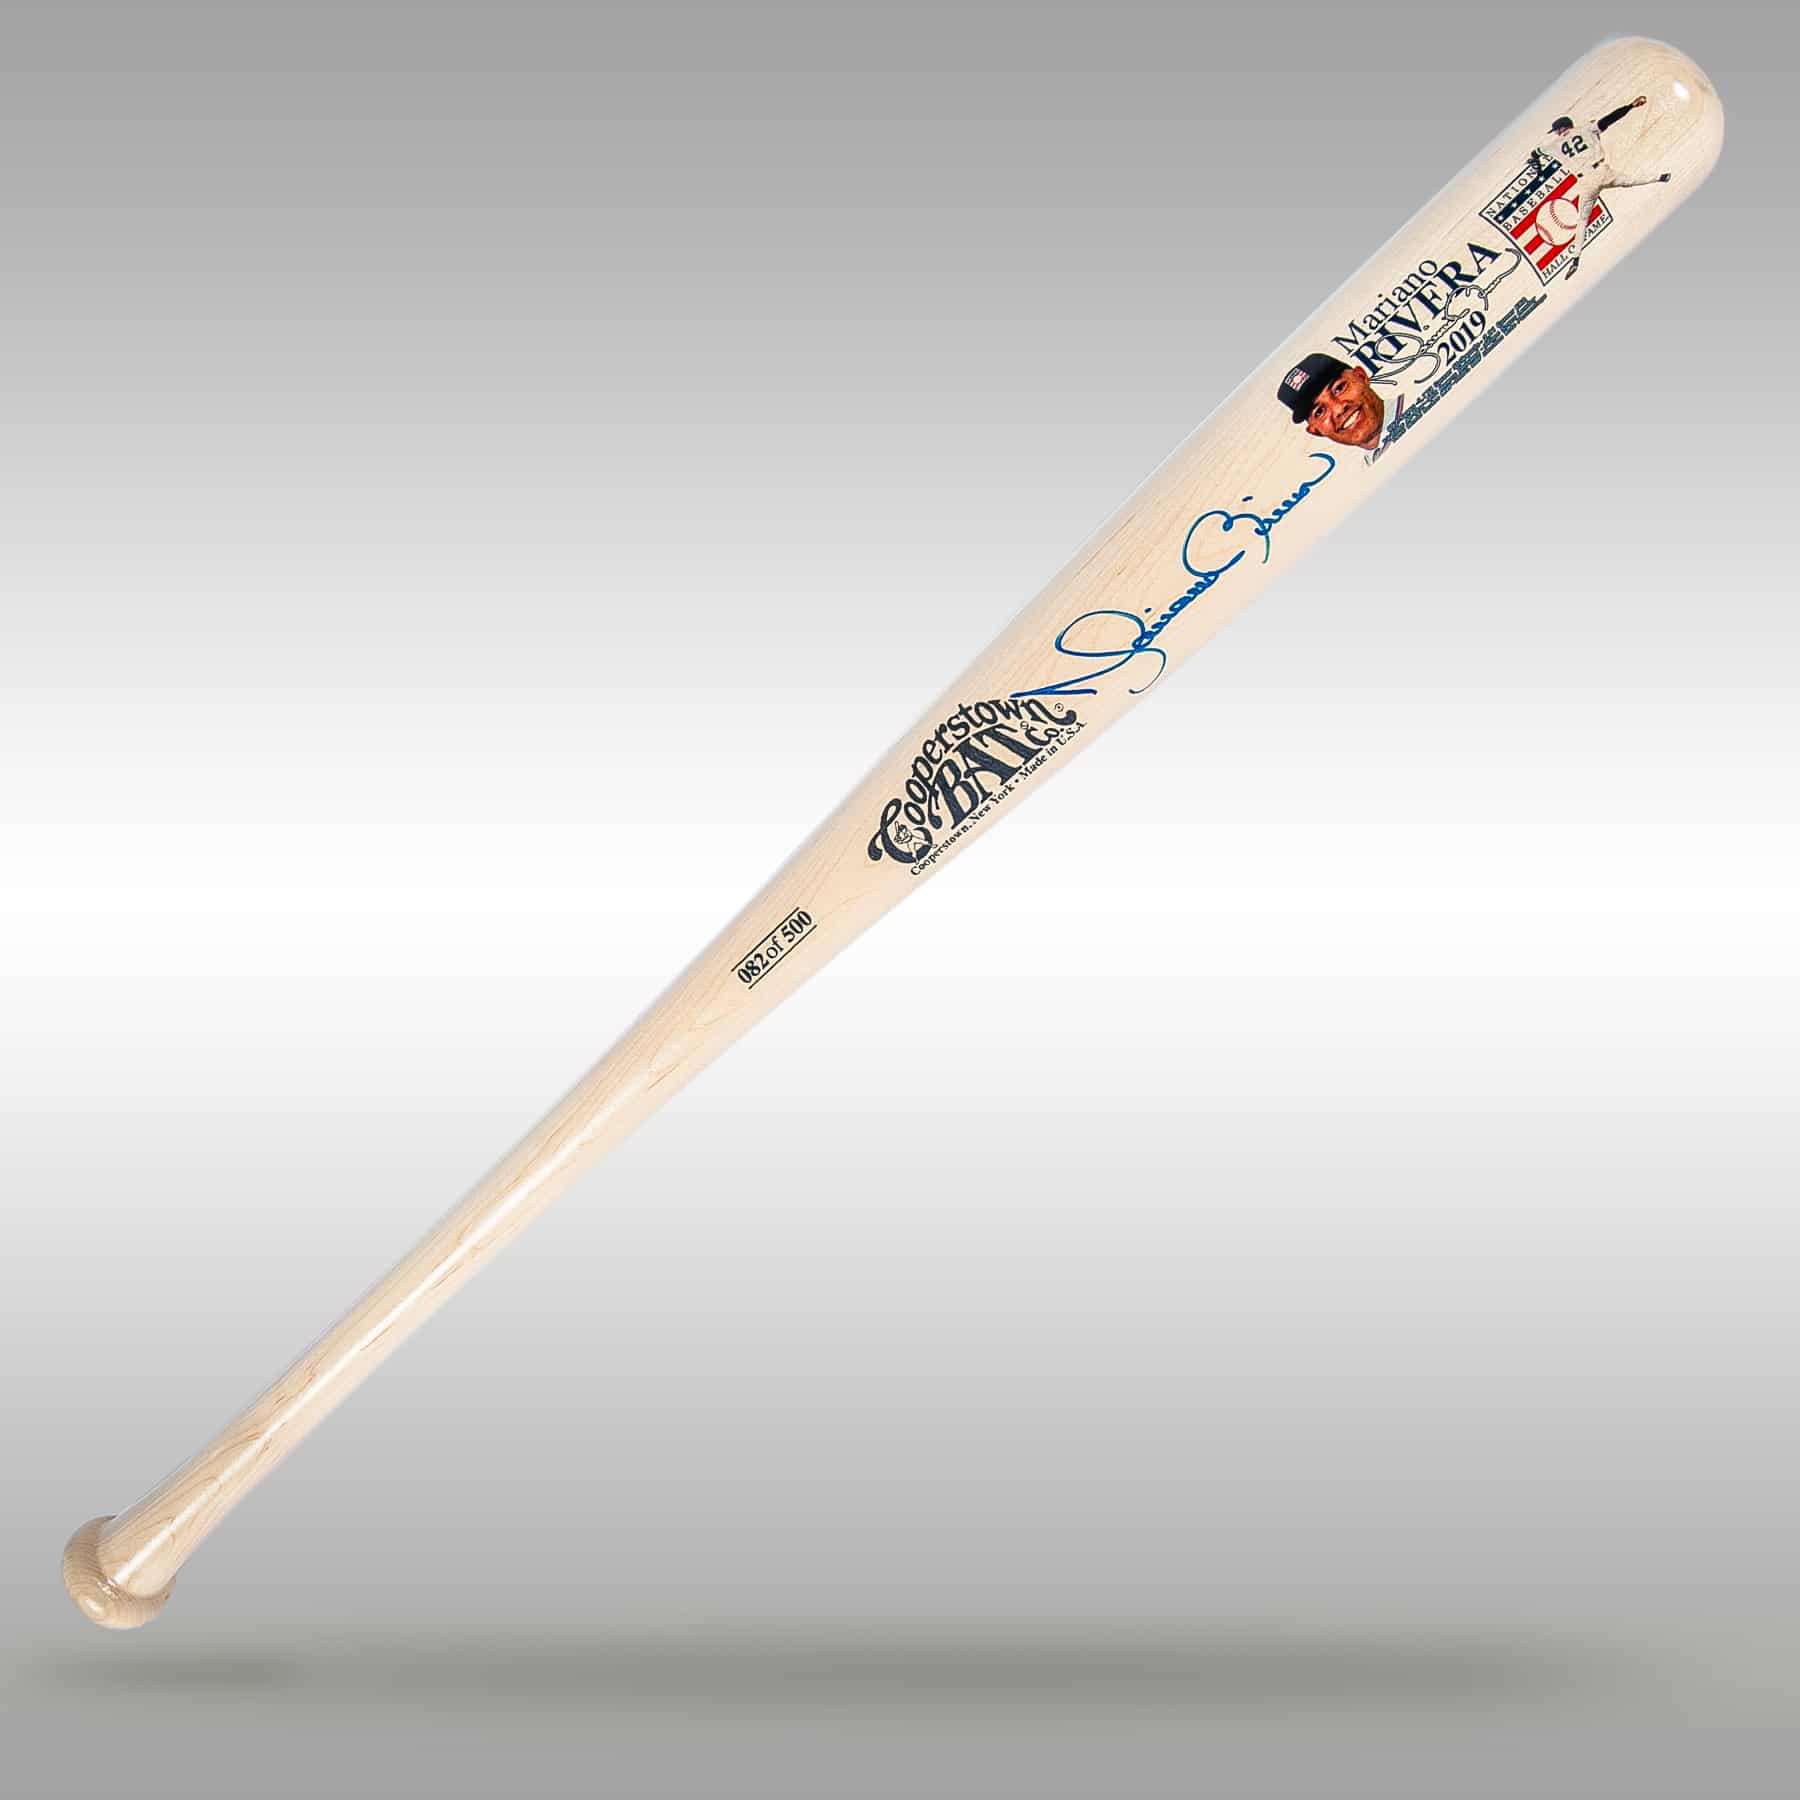 Mariano Rivera Limited Edition Baseball Autographed Bat